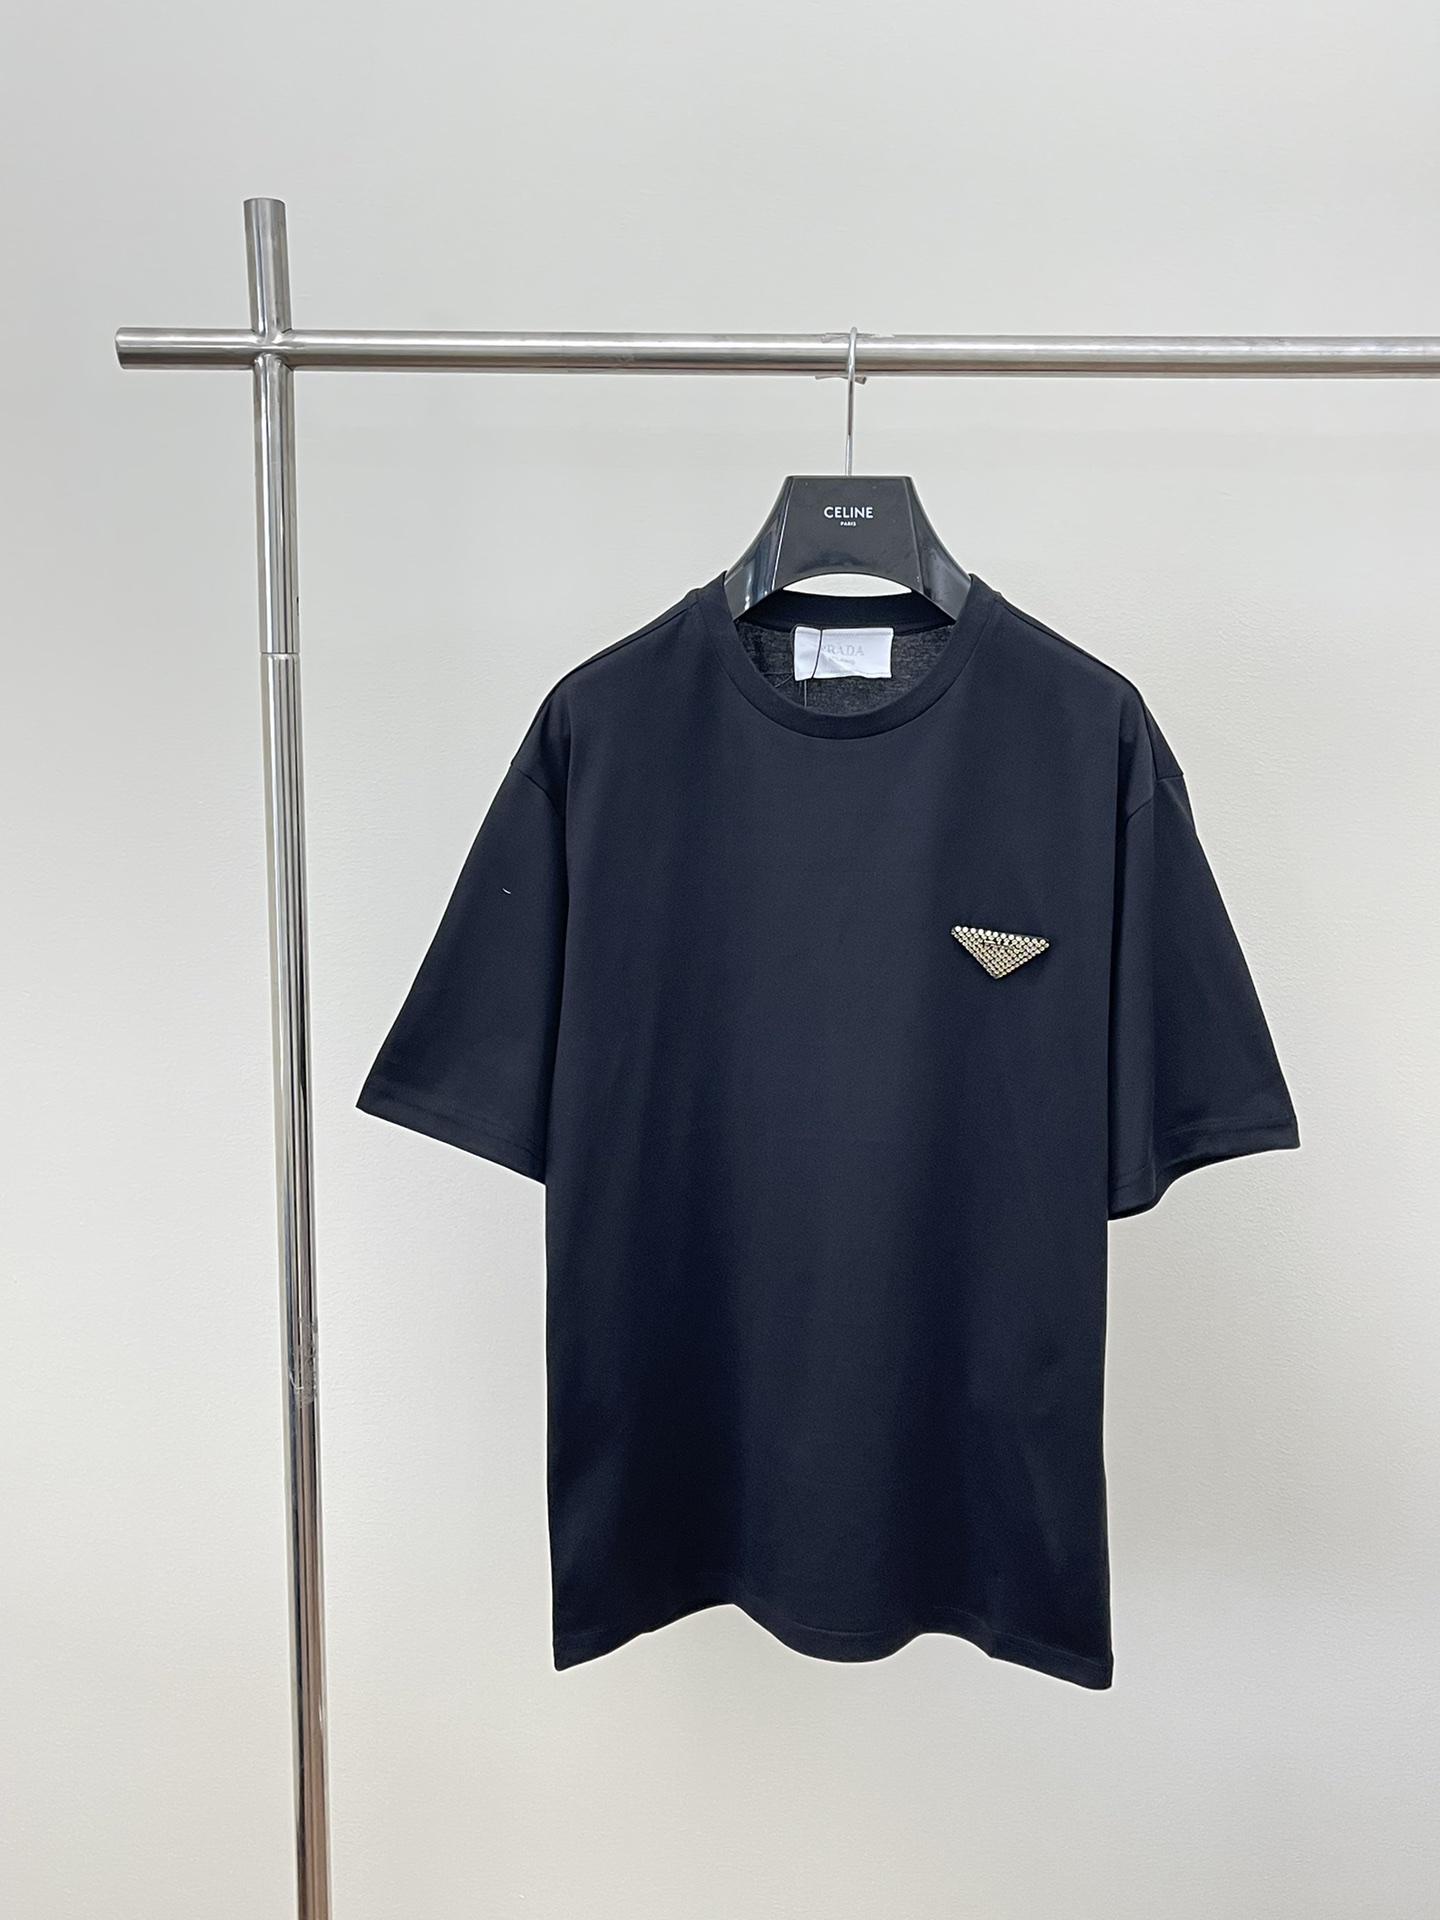 Prada Clothing T-Shirt Fashion Short Sleeve